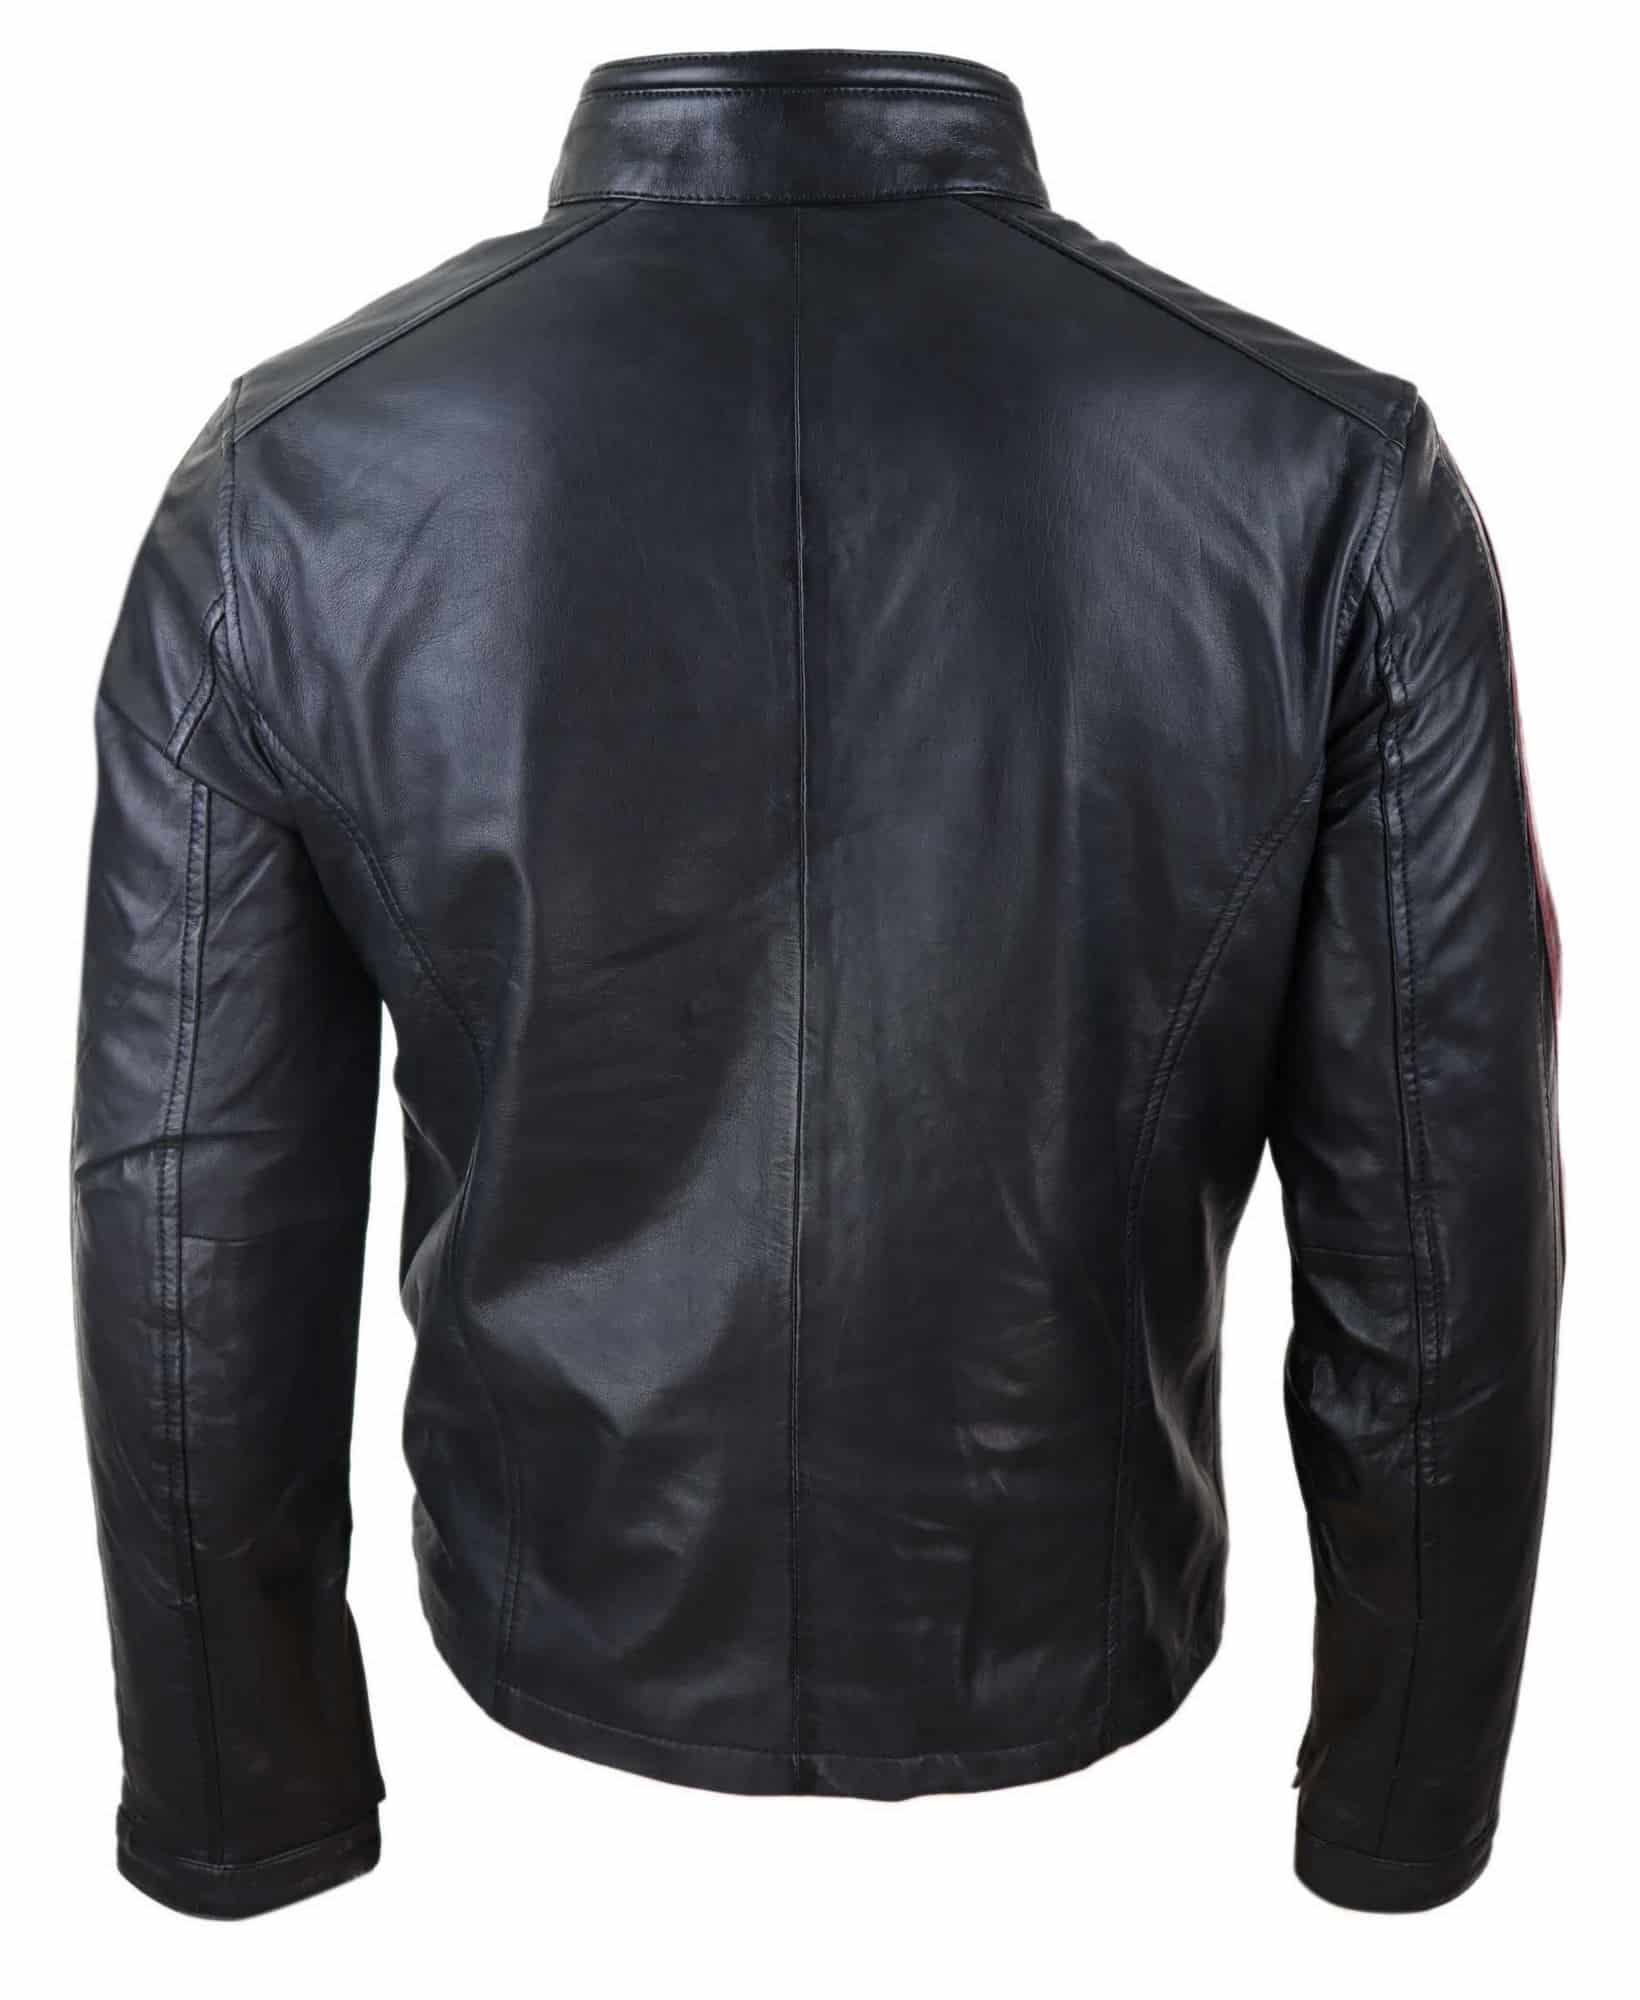 Mens Black Leather Jacket with Racing Stripes | Happy Gentleman